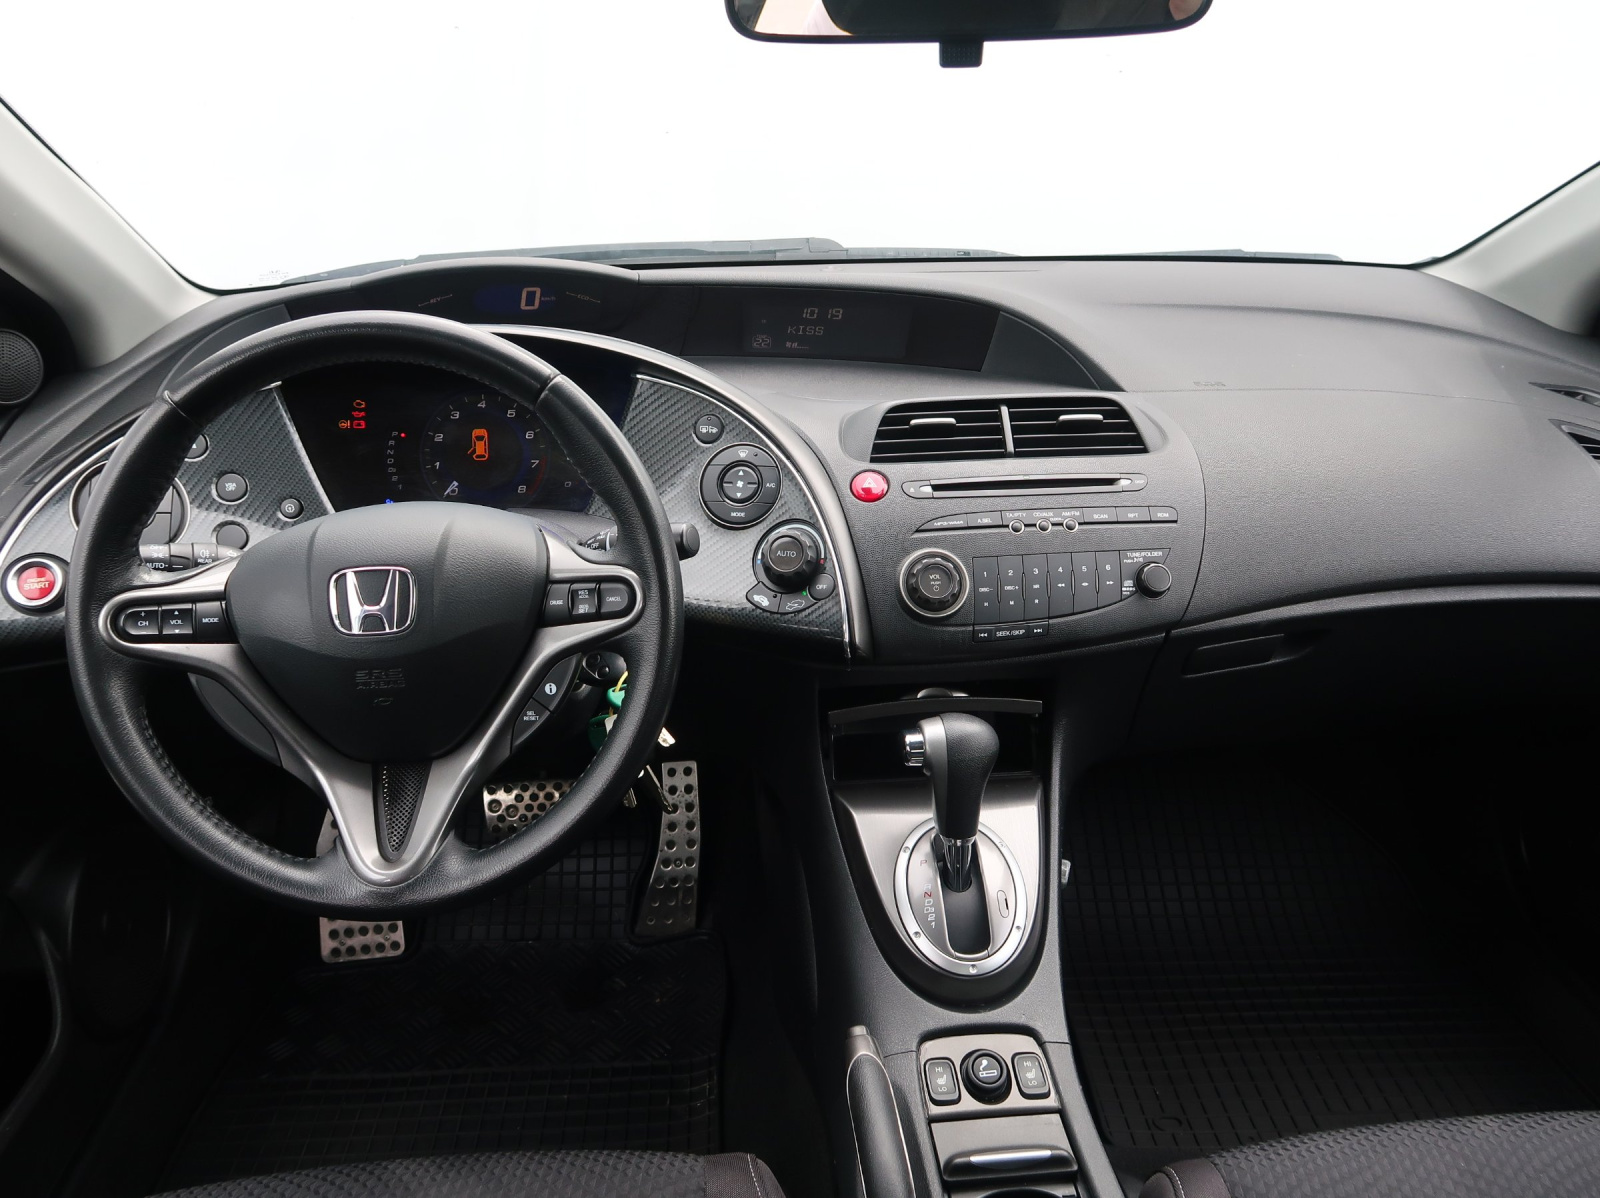 Honda Civic, 2010, 1.8 i, 103kW